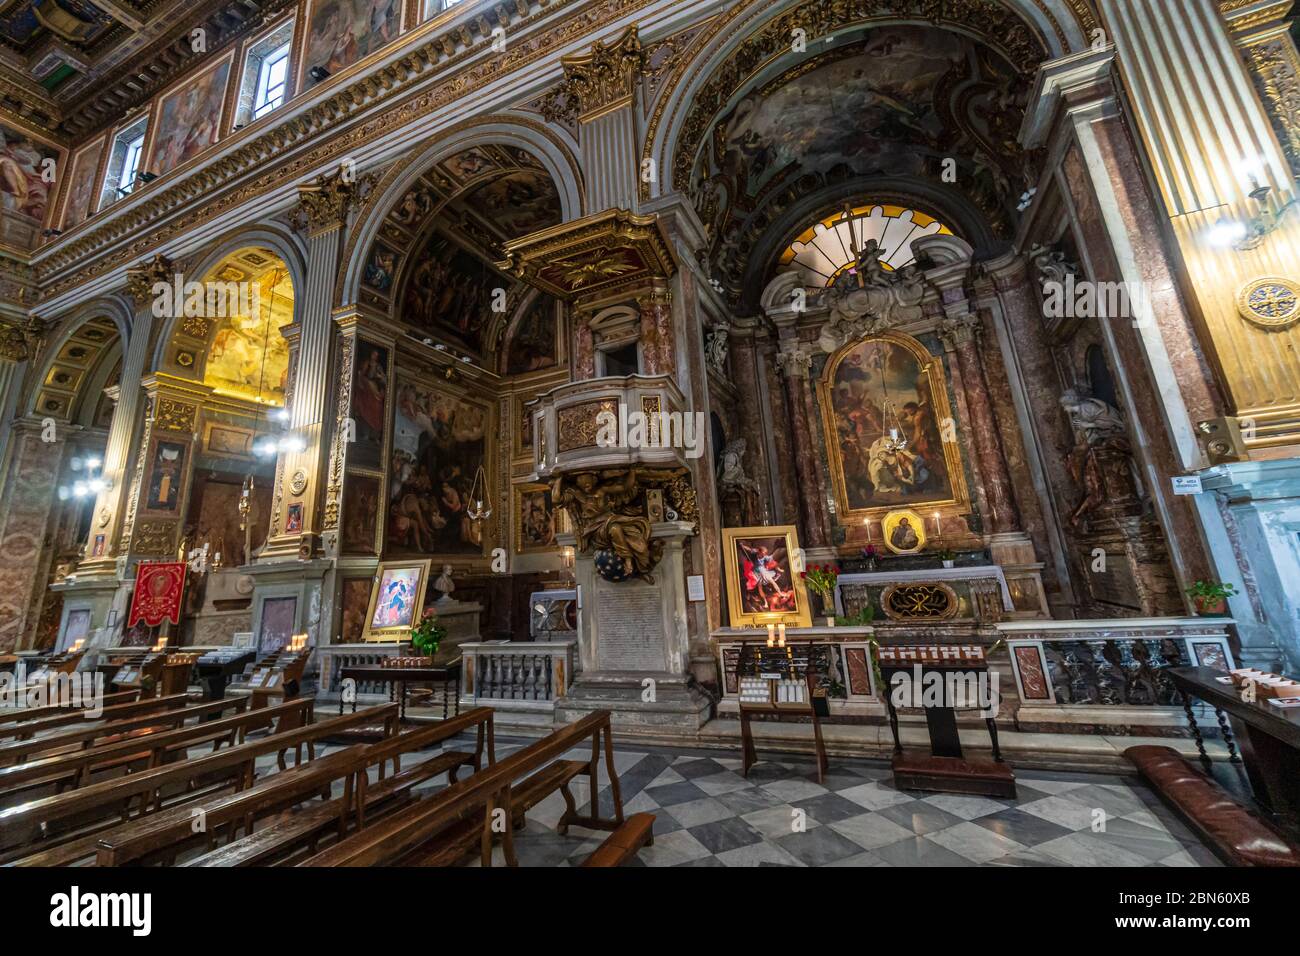 Rome, Italy - 10 03 2018: Interior of the church San Marcello al Corso in Rome, Italy Stock Photo